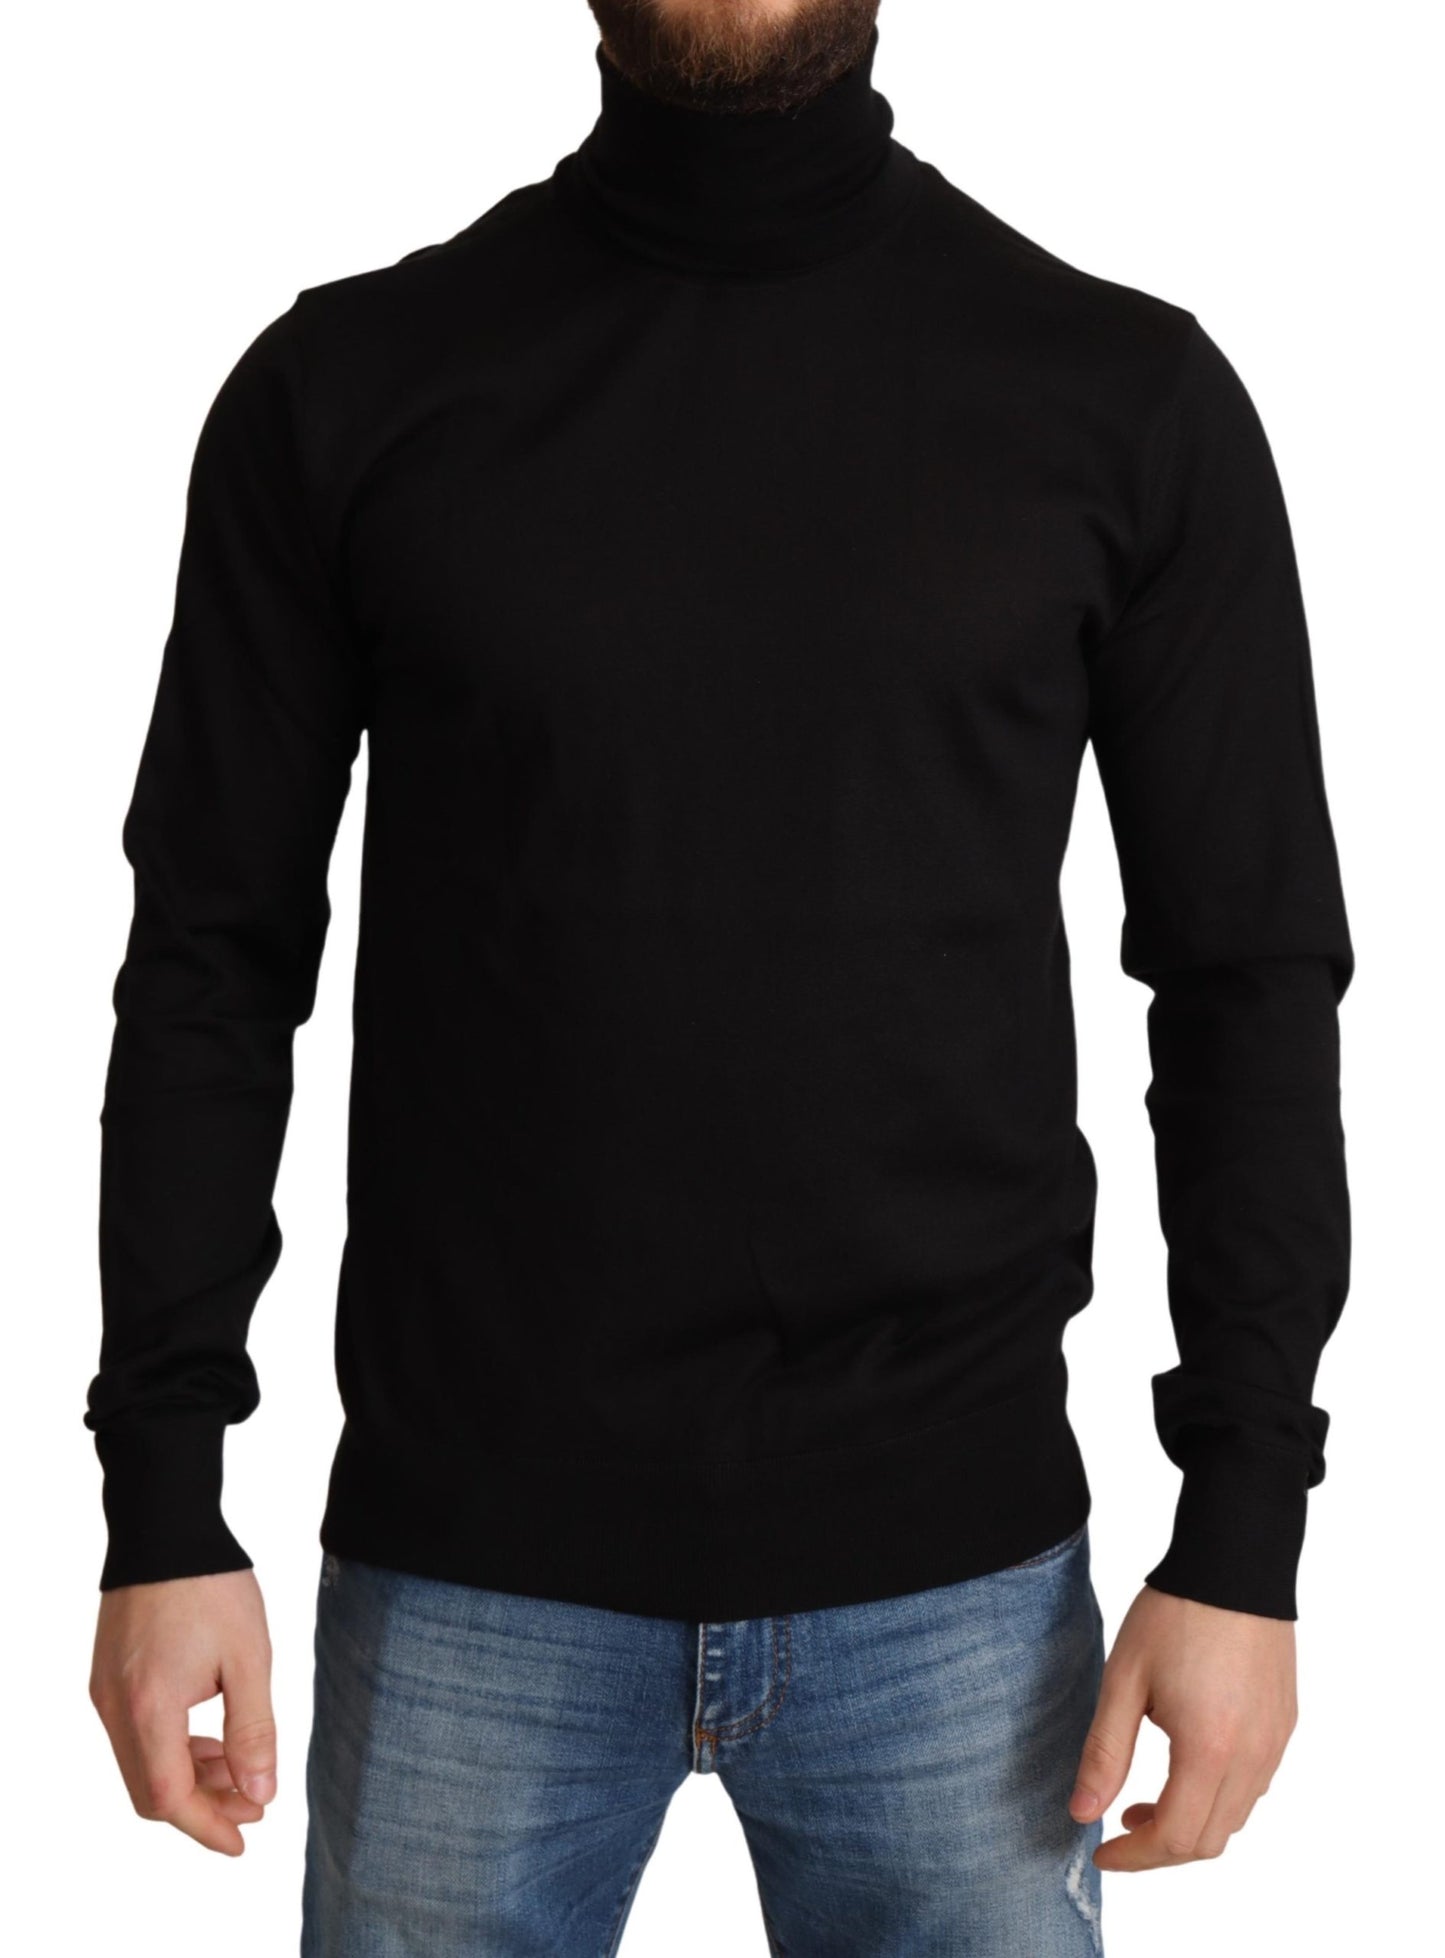 Black Cashmere Turtleneck Pullover Sweater